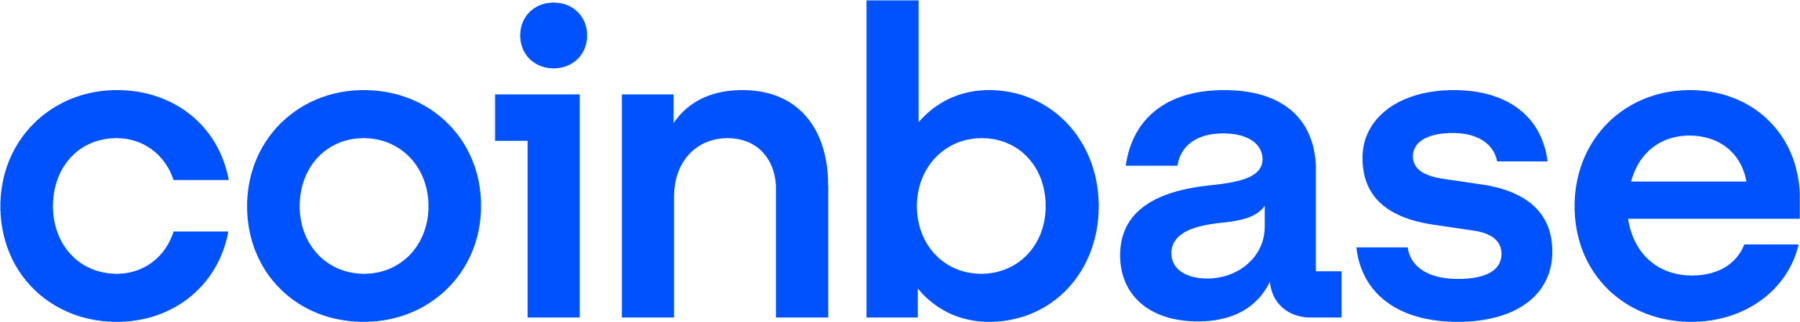 Coinbase Logo blau auf weiß